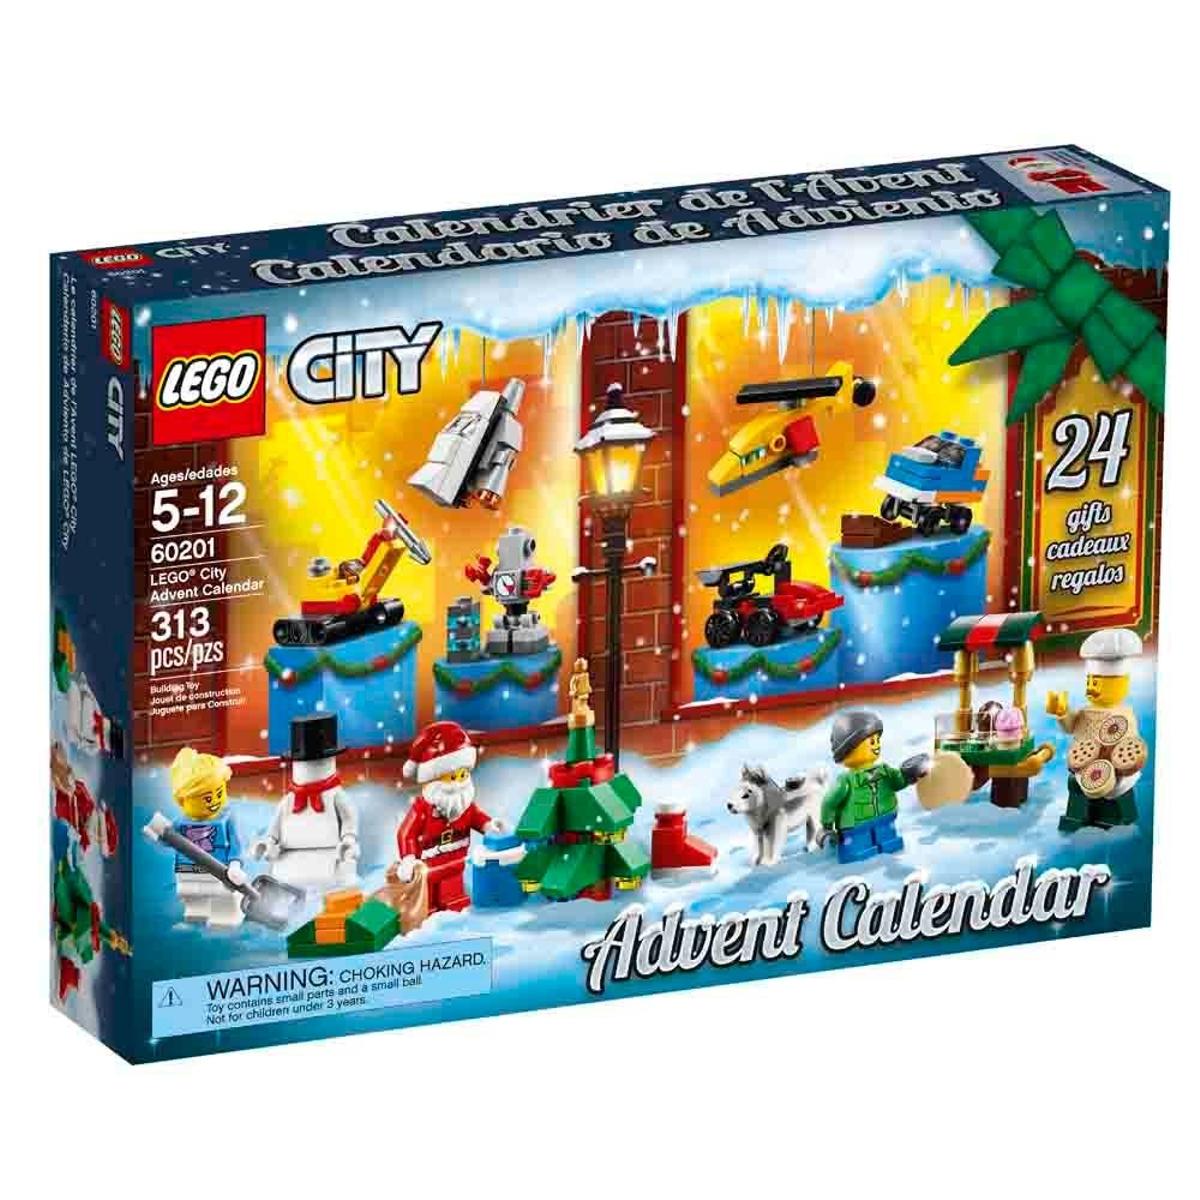 Calendario de adviento de Lego City